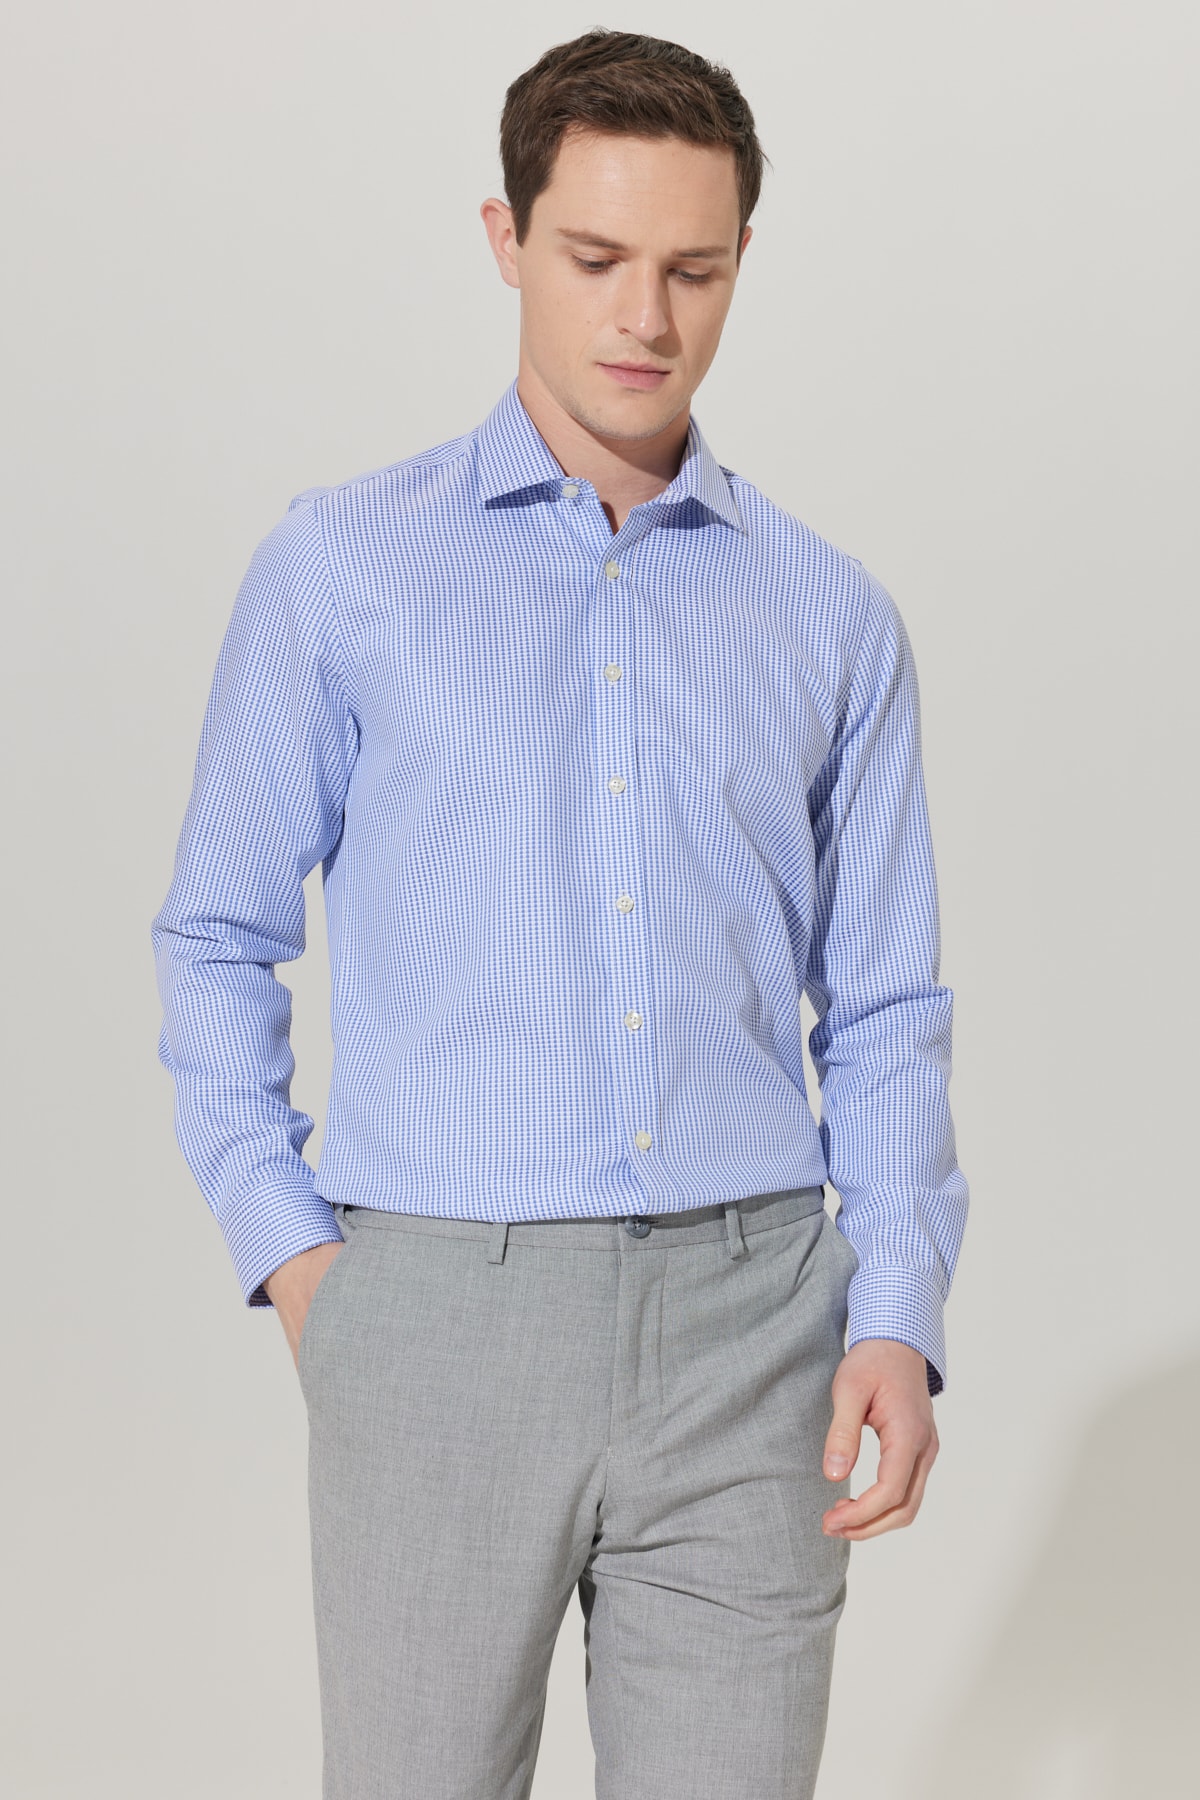 Levně ALTINYILDIZ CLASSICS Men's White-blue No-Iron Tailored Slim Fit Classic Collar 100% Cotton Patterned Non-iron Shirt.